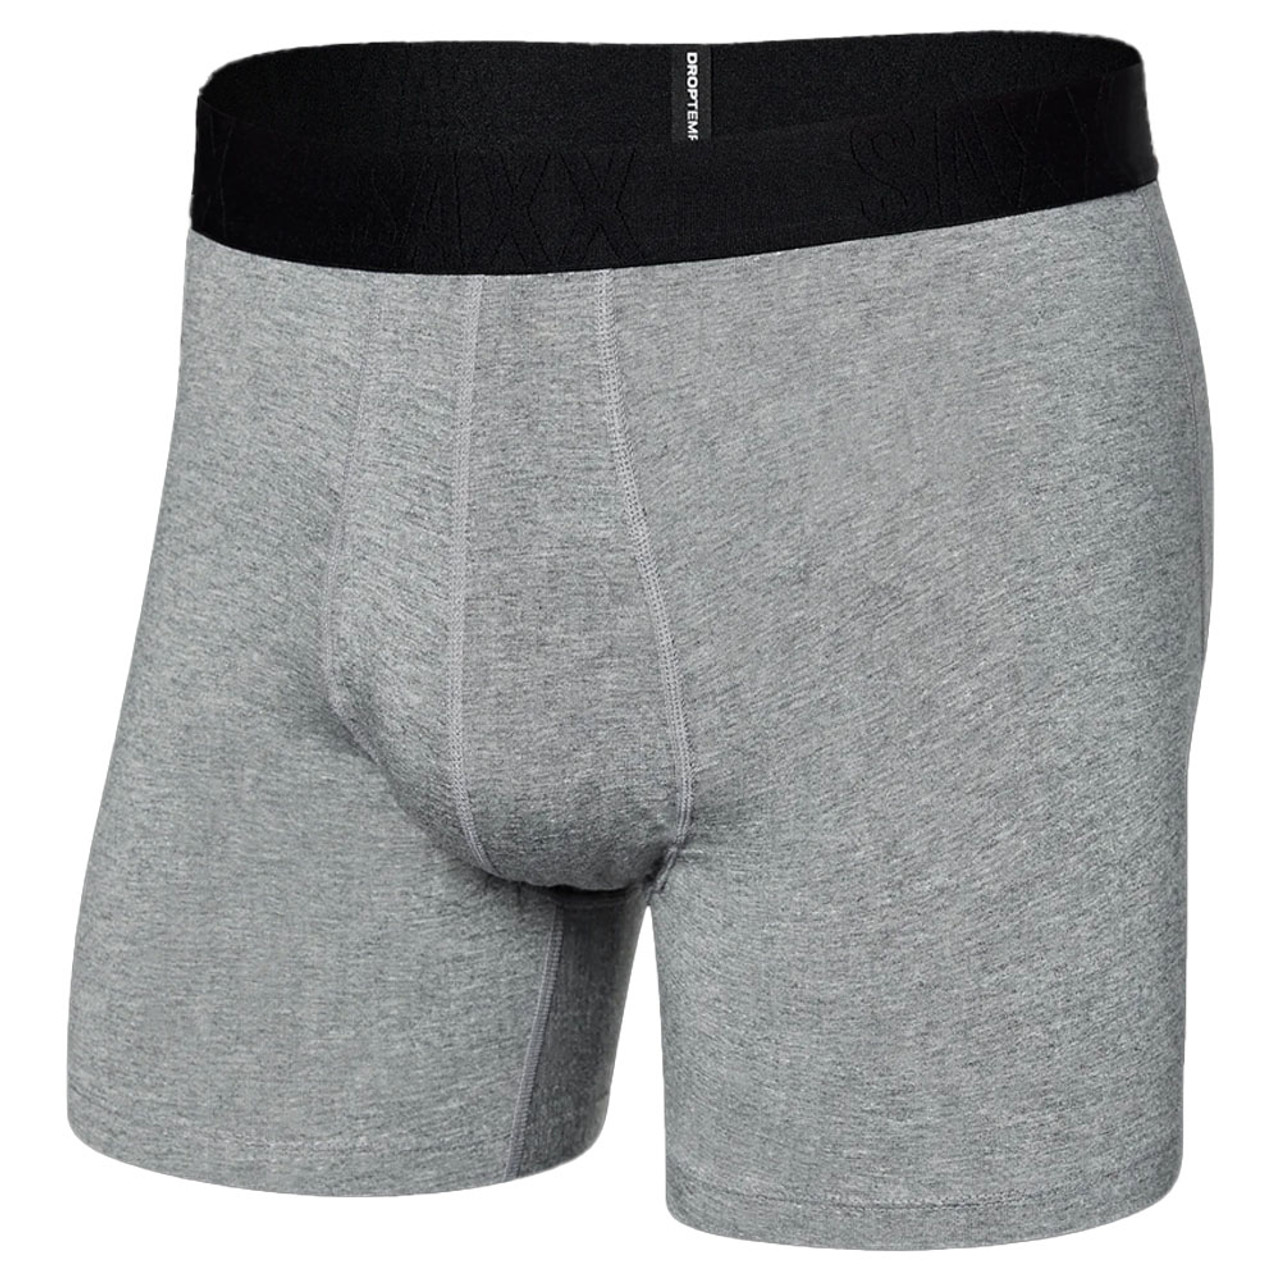 Droptemp Cooling – SAXX Underwear